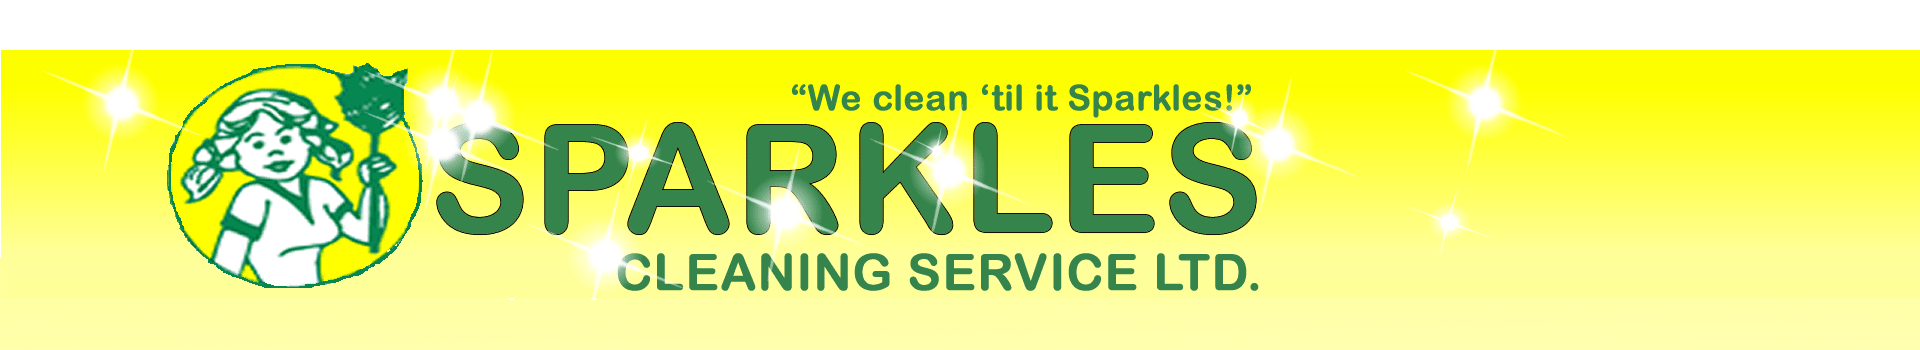 Sparkles Cleaning Service Ltd.